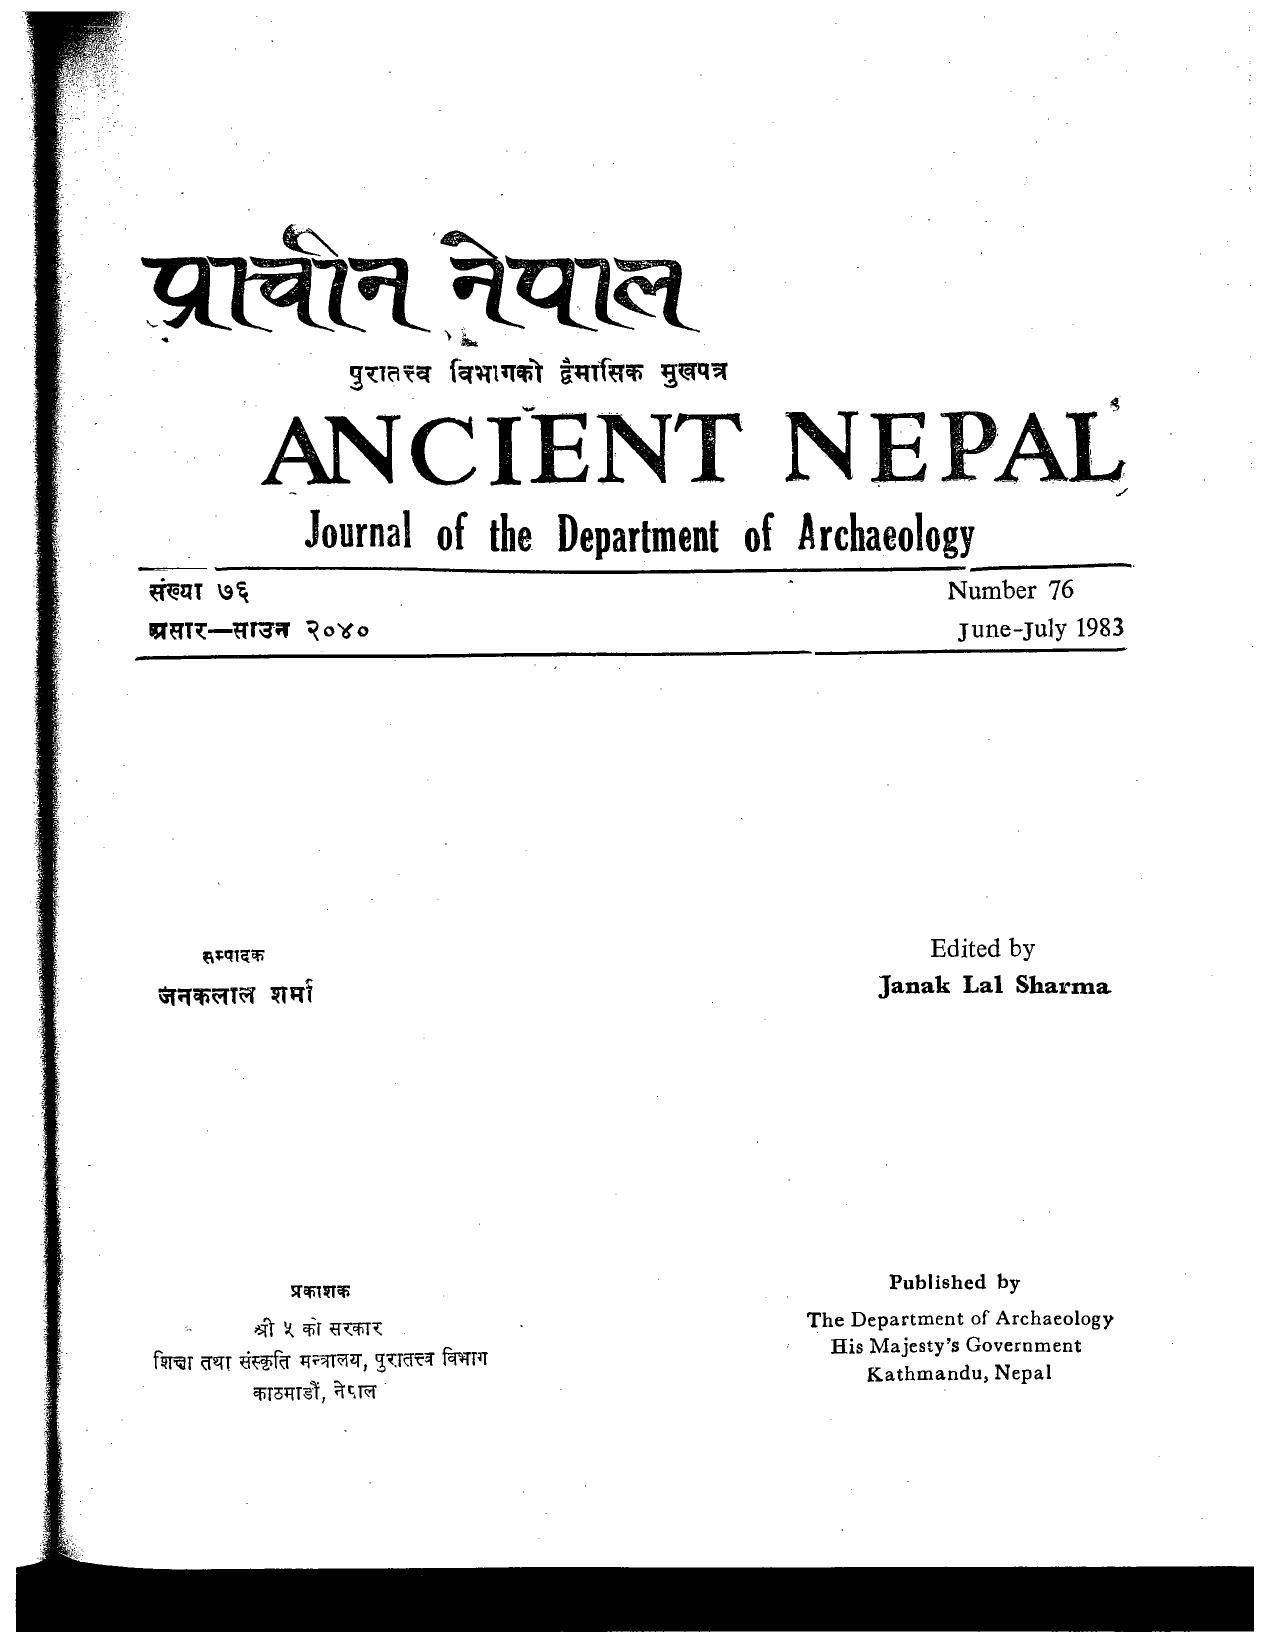 Ancient Nepal 76